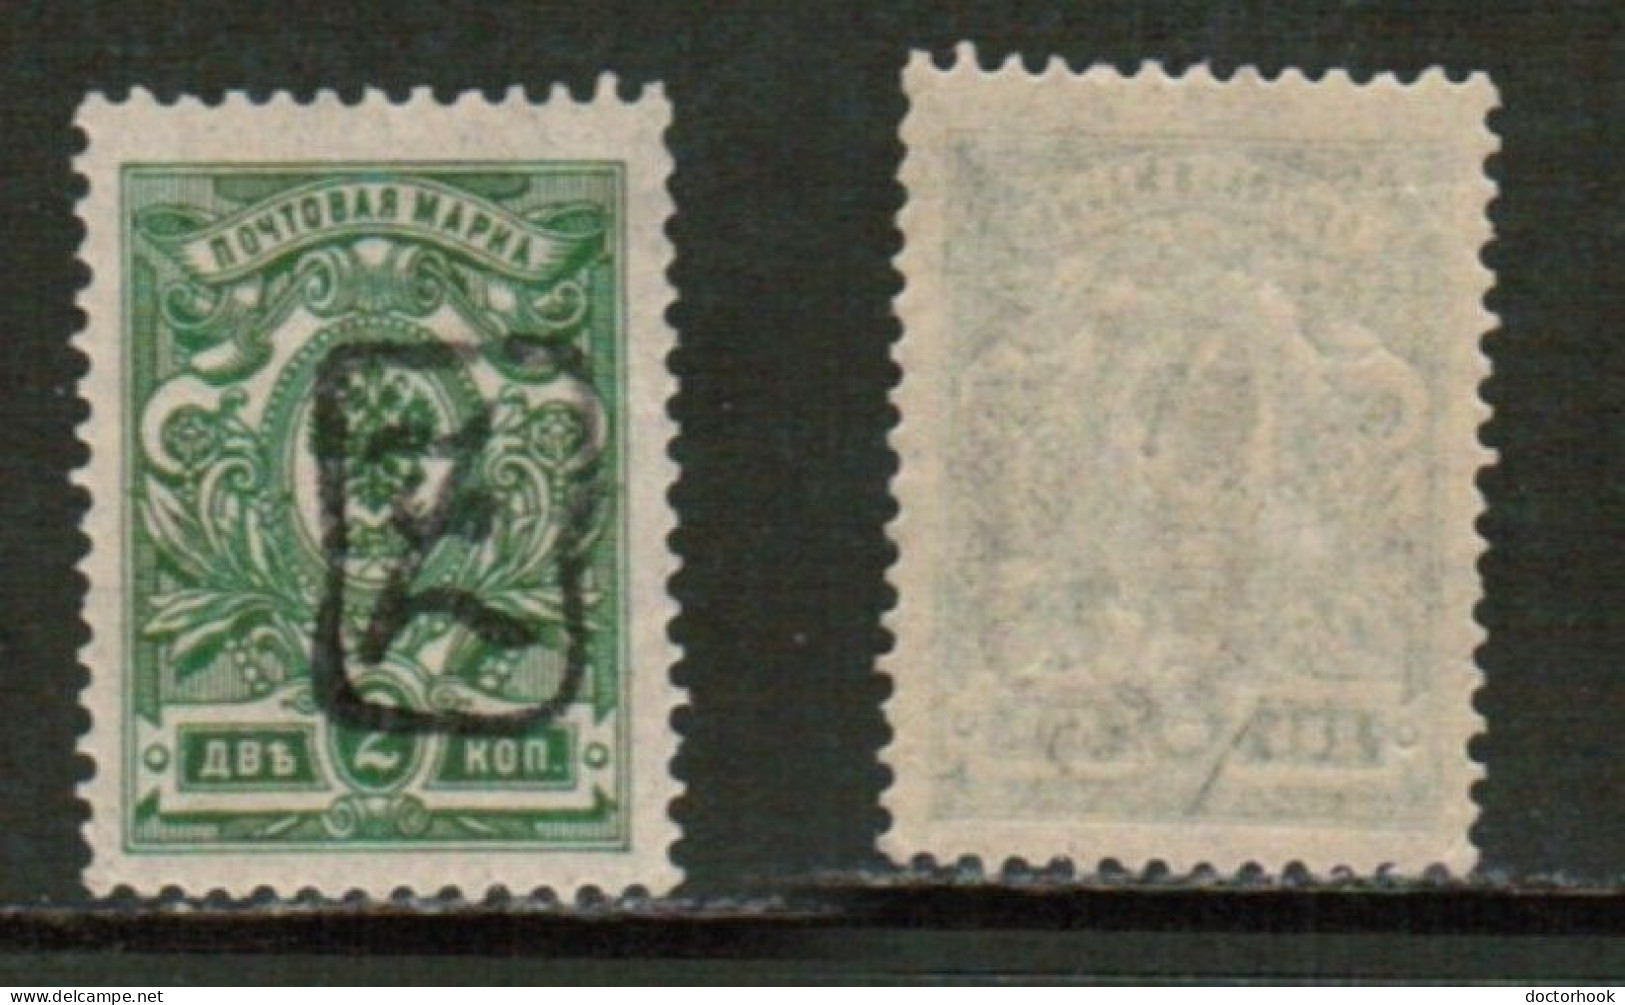 ARMANIA   Scott # 31a** MINT NH (CONDITION AS PER SCAN) (Stamp Scan # 920-5) - Armenia